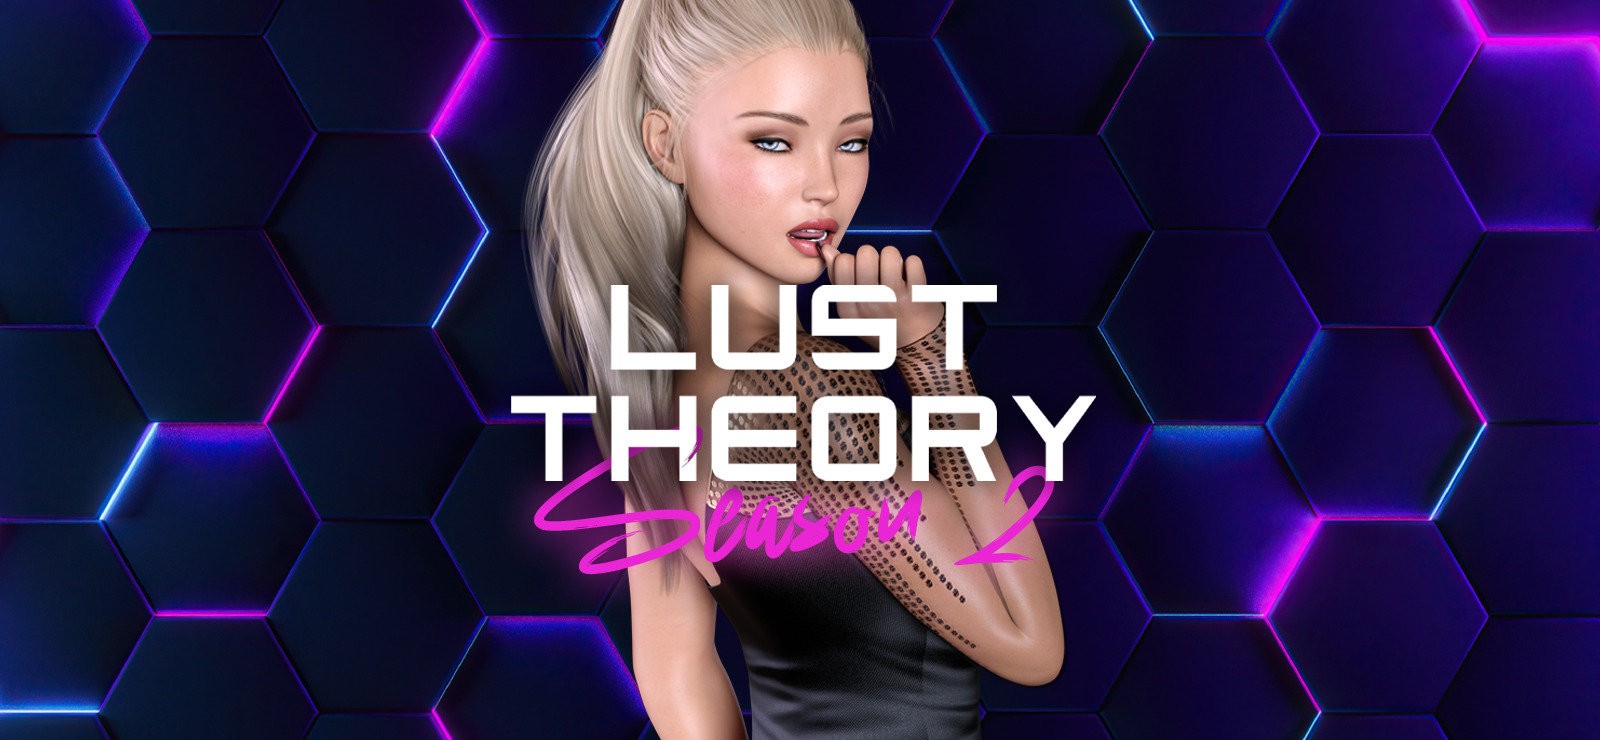 Lust theory season 2 apk